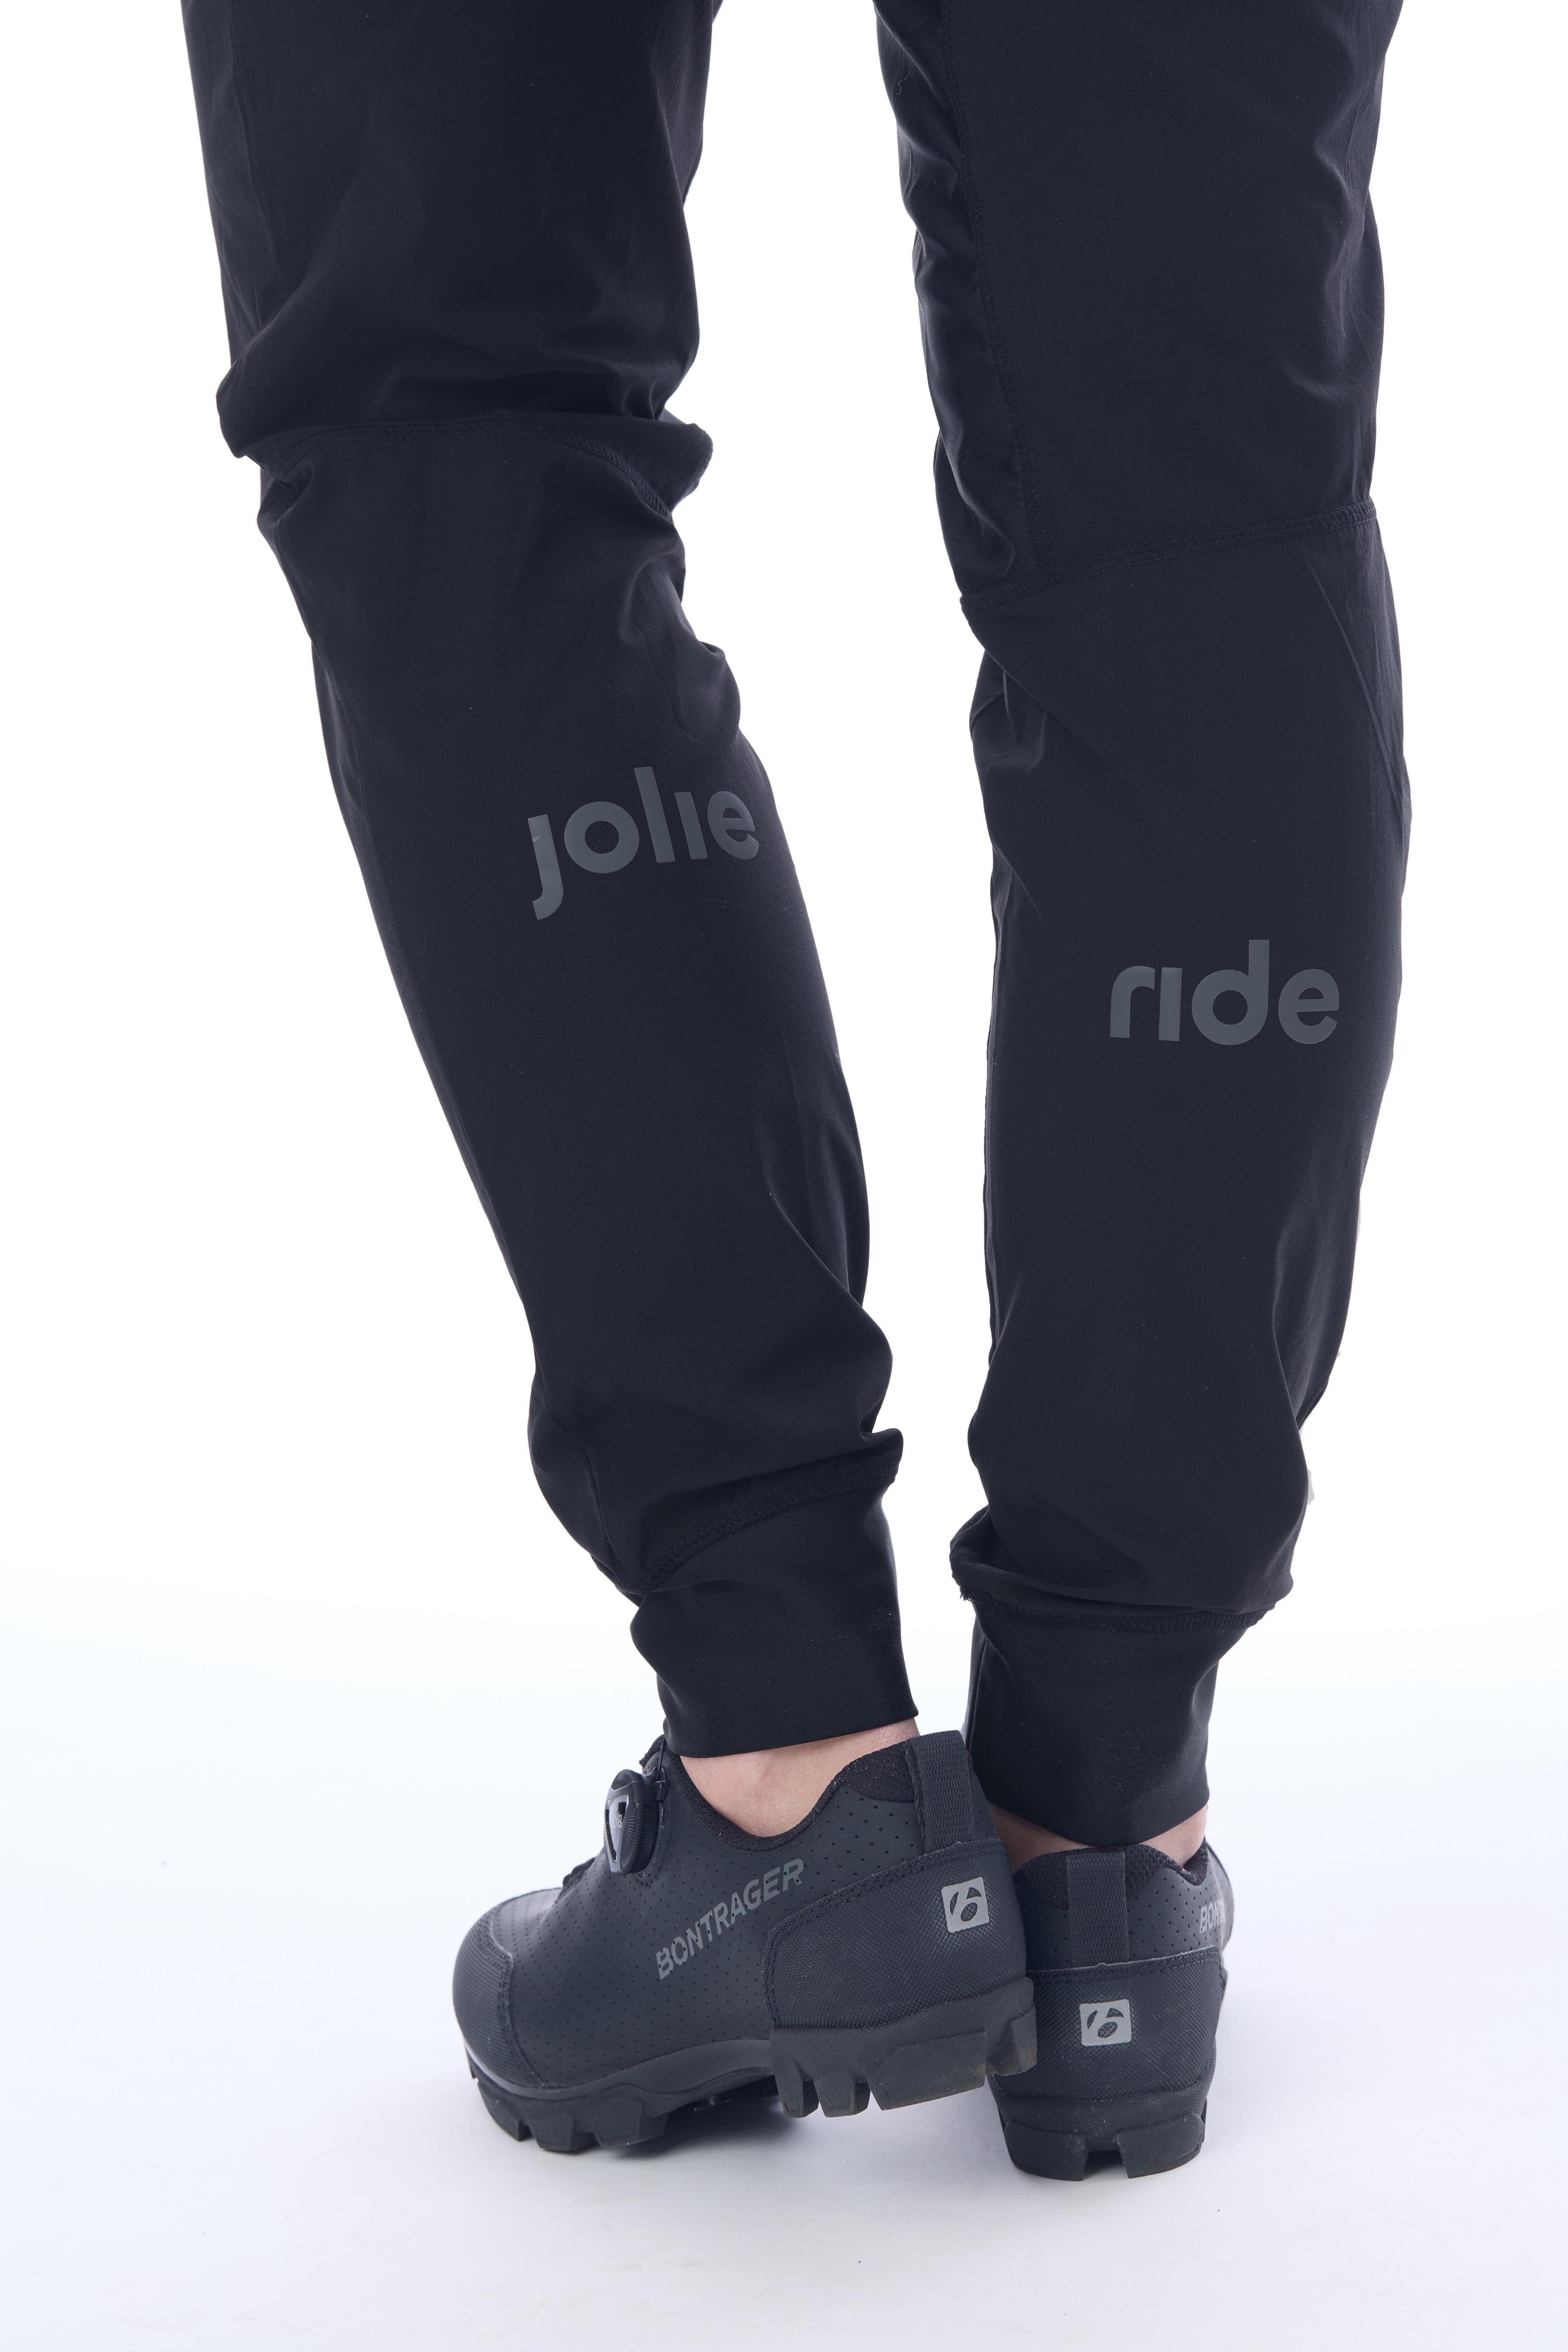 JolieRide Pants mtb jogger pants  - lightweight with wide yoga-like waistband